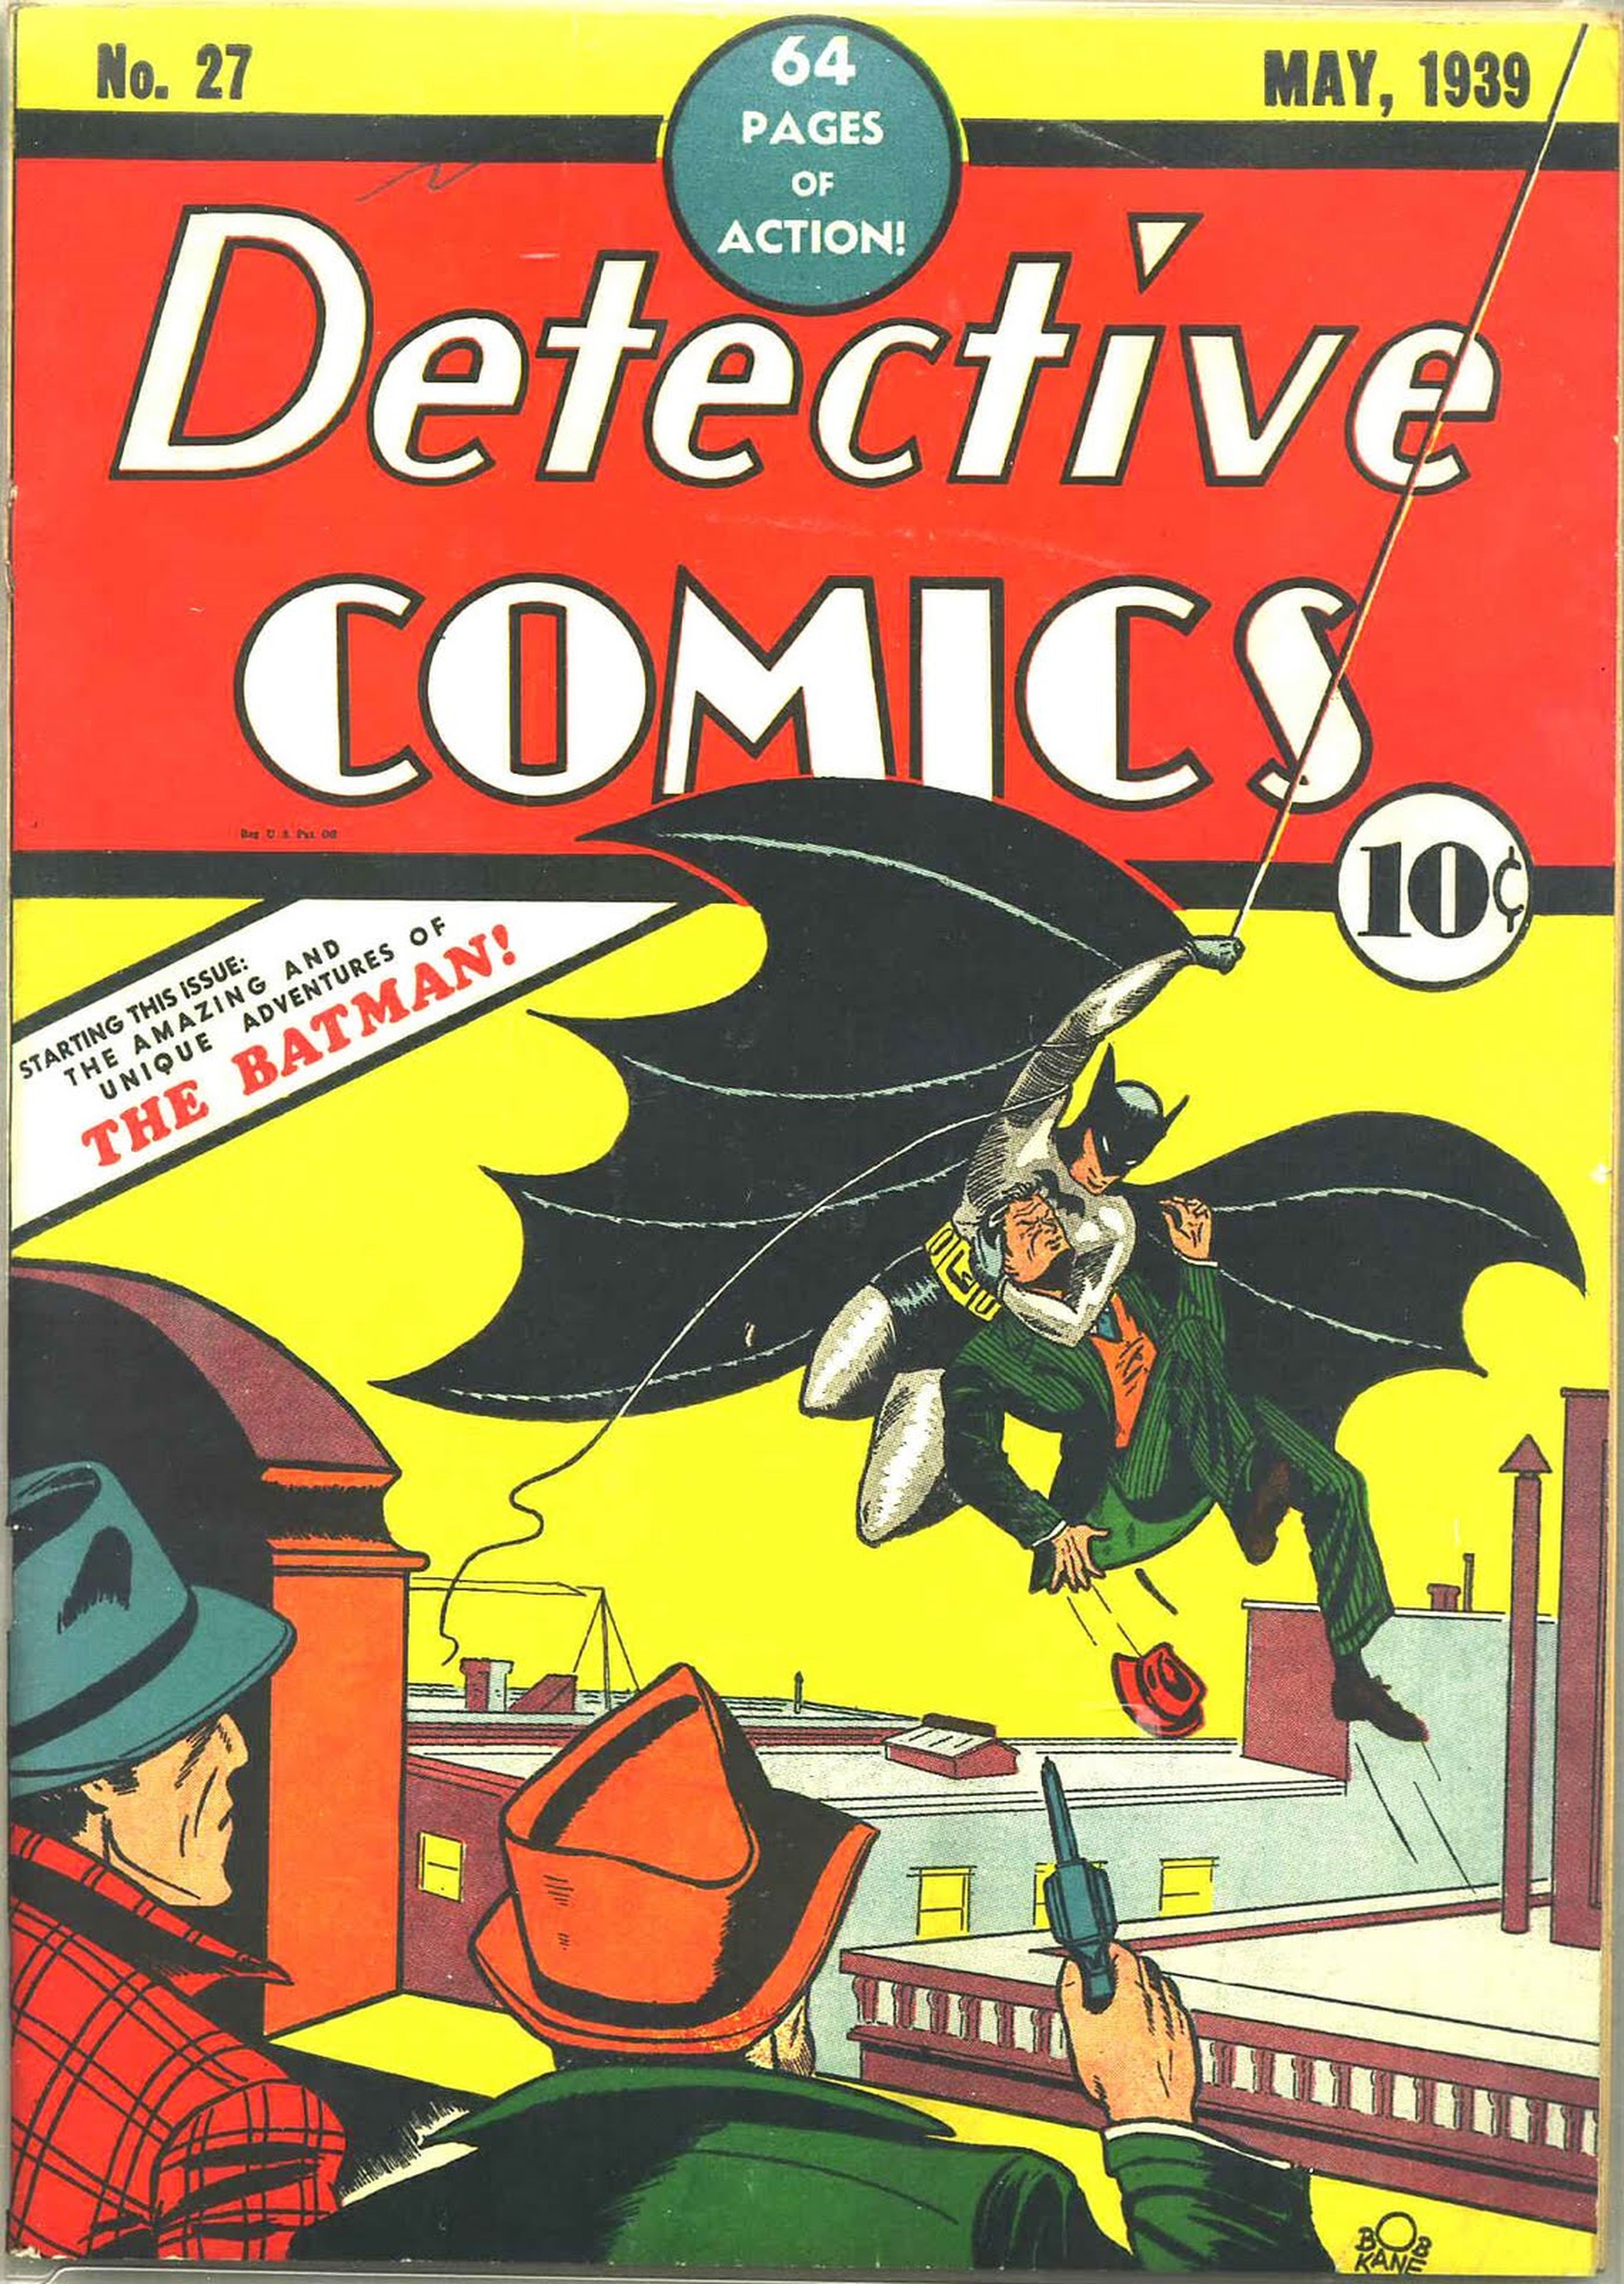 Batman celebra su 75 aniversario con el corto Strange Days